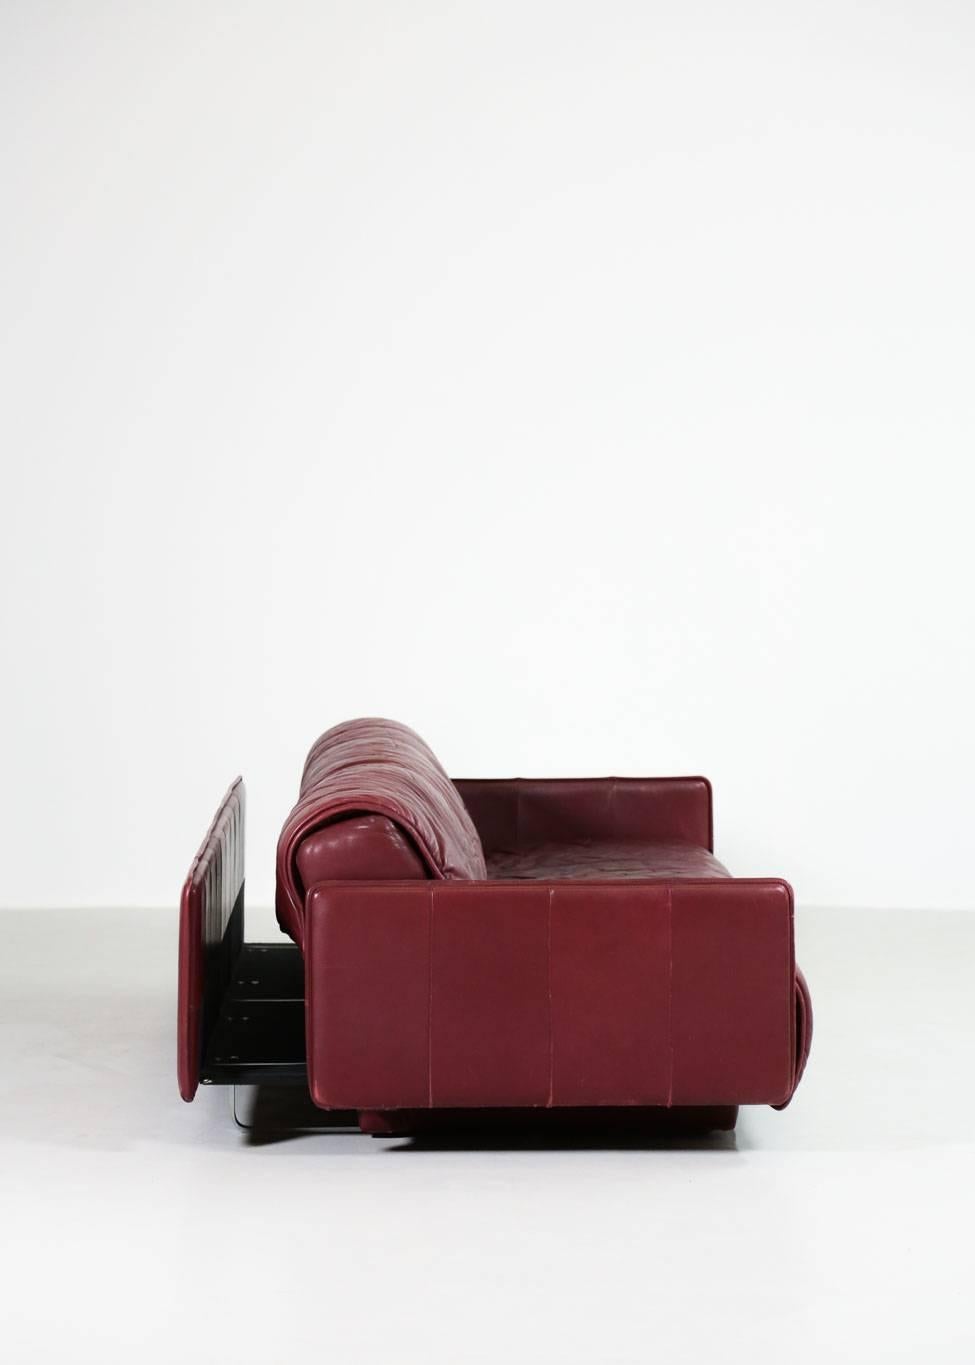 De Sede Leather Sofa Bed, 1970s Swiss Design DS85 DS600 3